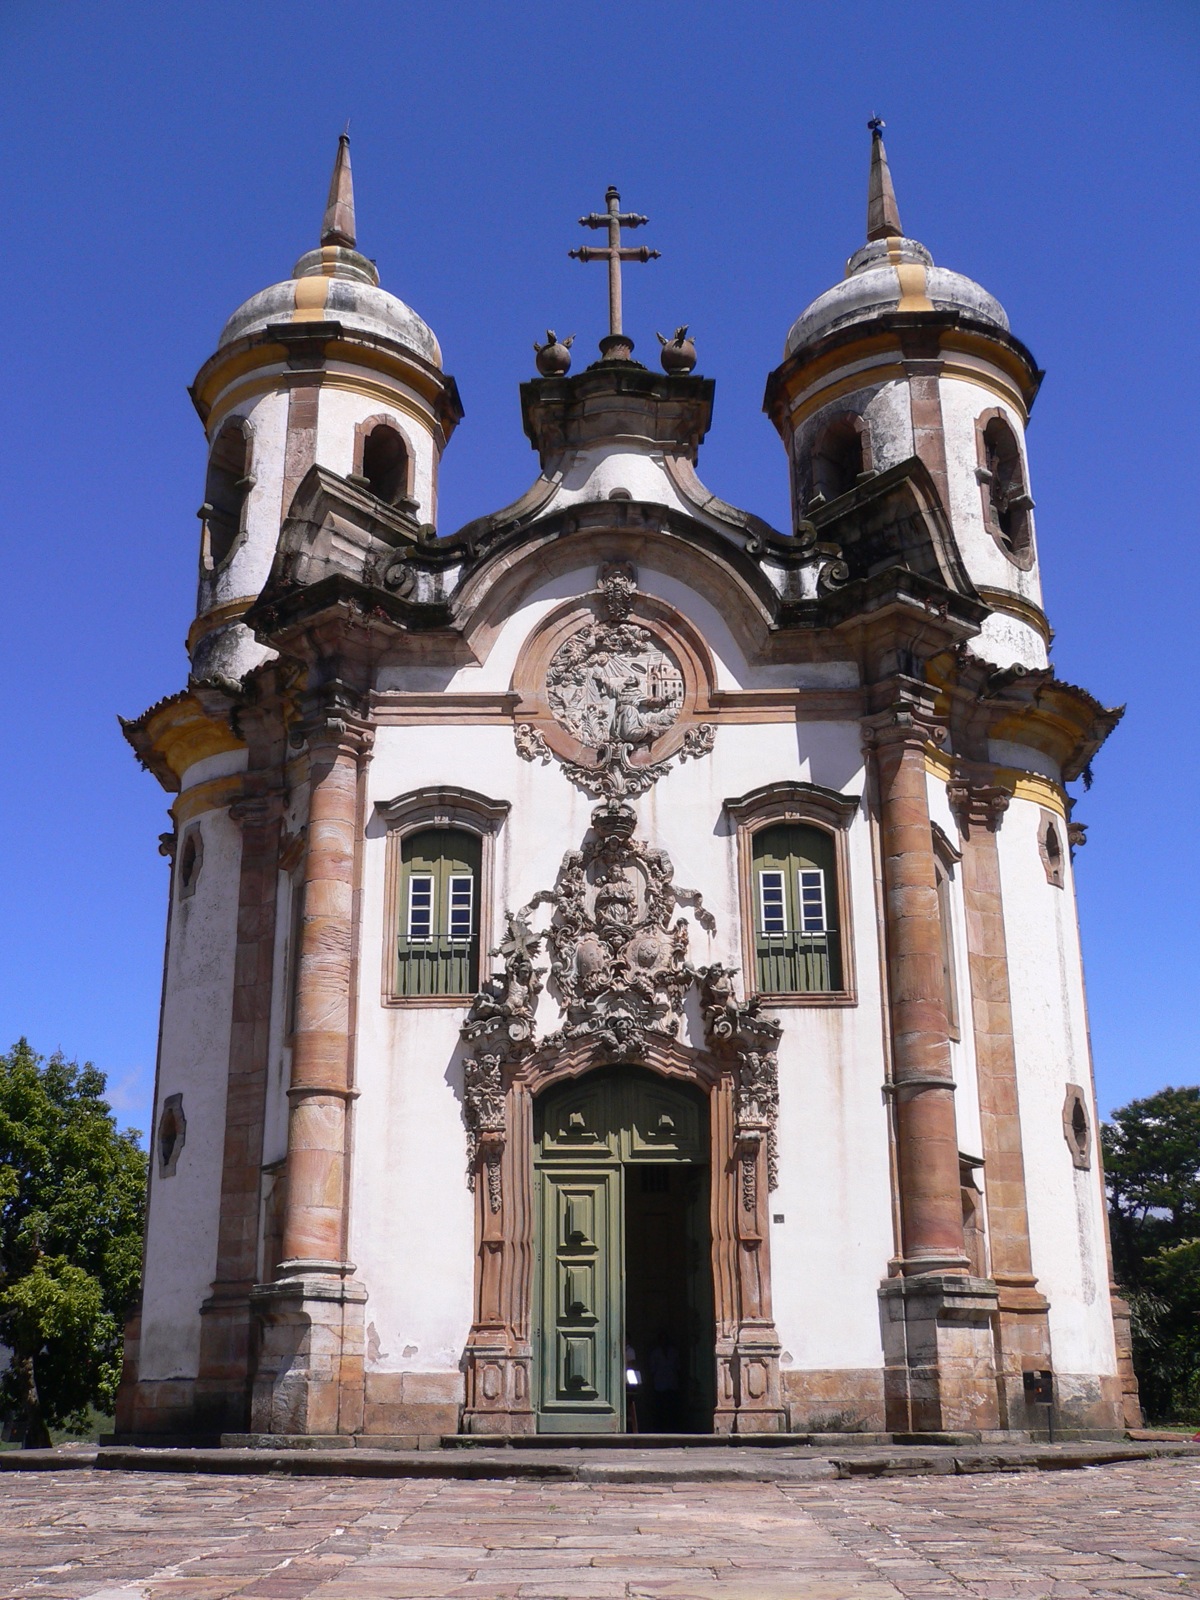 Designed by Antonio Francisco Lisboa (known as Aleijadinho), Church of Saint Francis of Assisi, Ouro Preto, 1766, photo by svenwerk via flickr